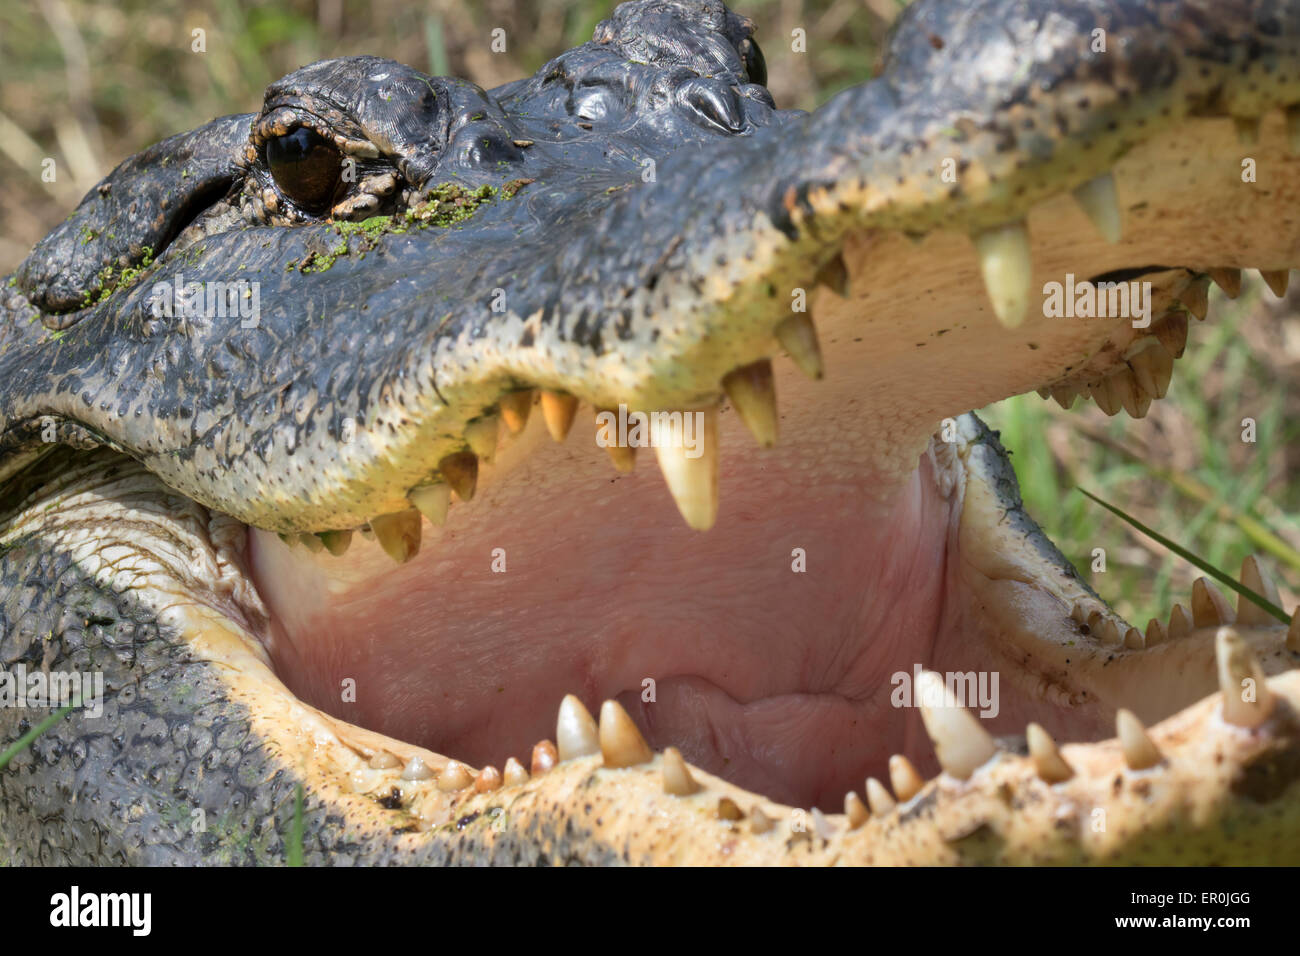 American alligator (Alligator mississippiensis) sight, Brazos Bend state park, Needville, Texas, USA. Stock Photo